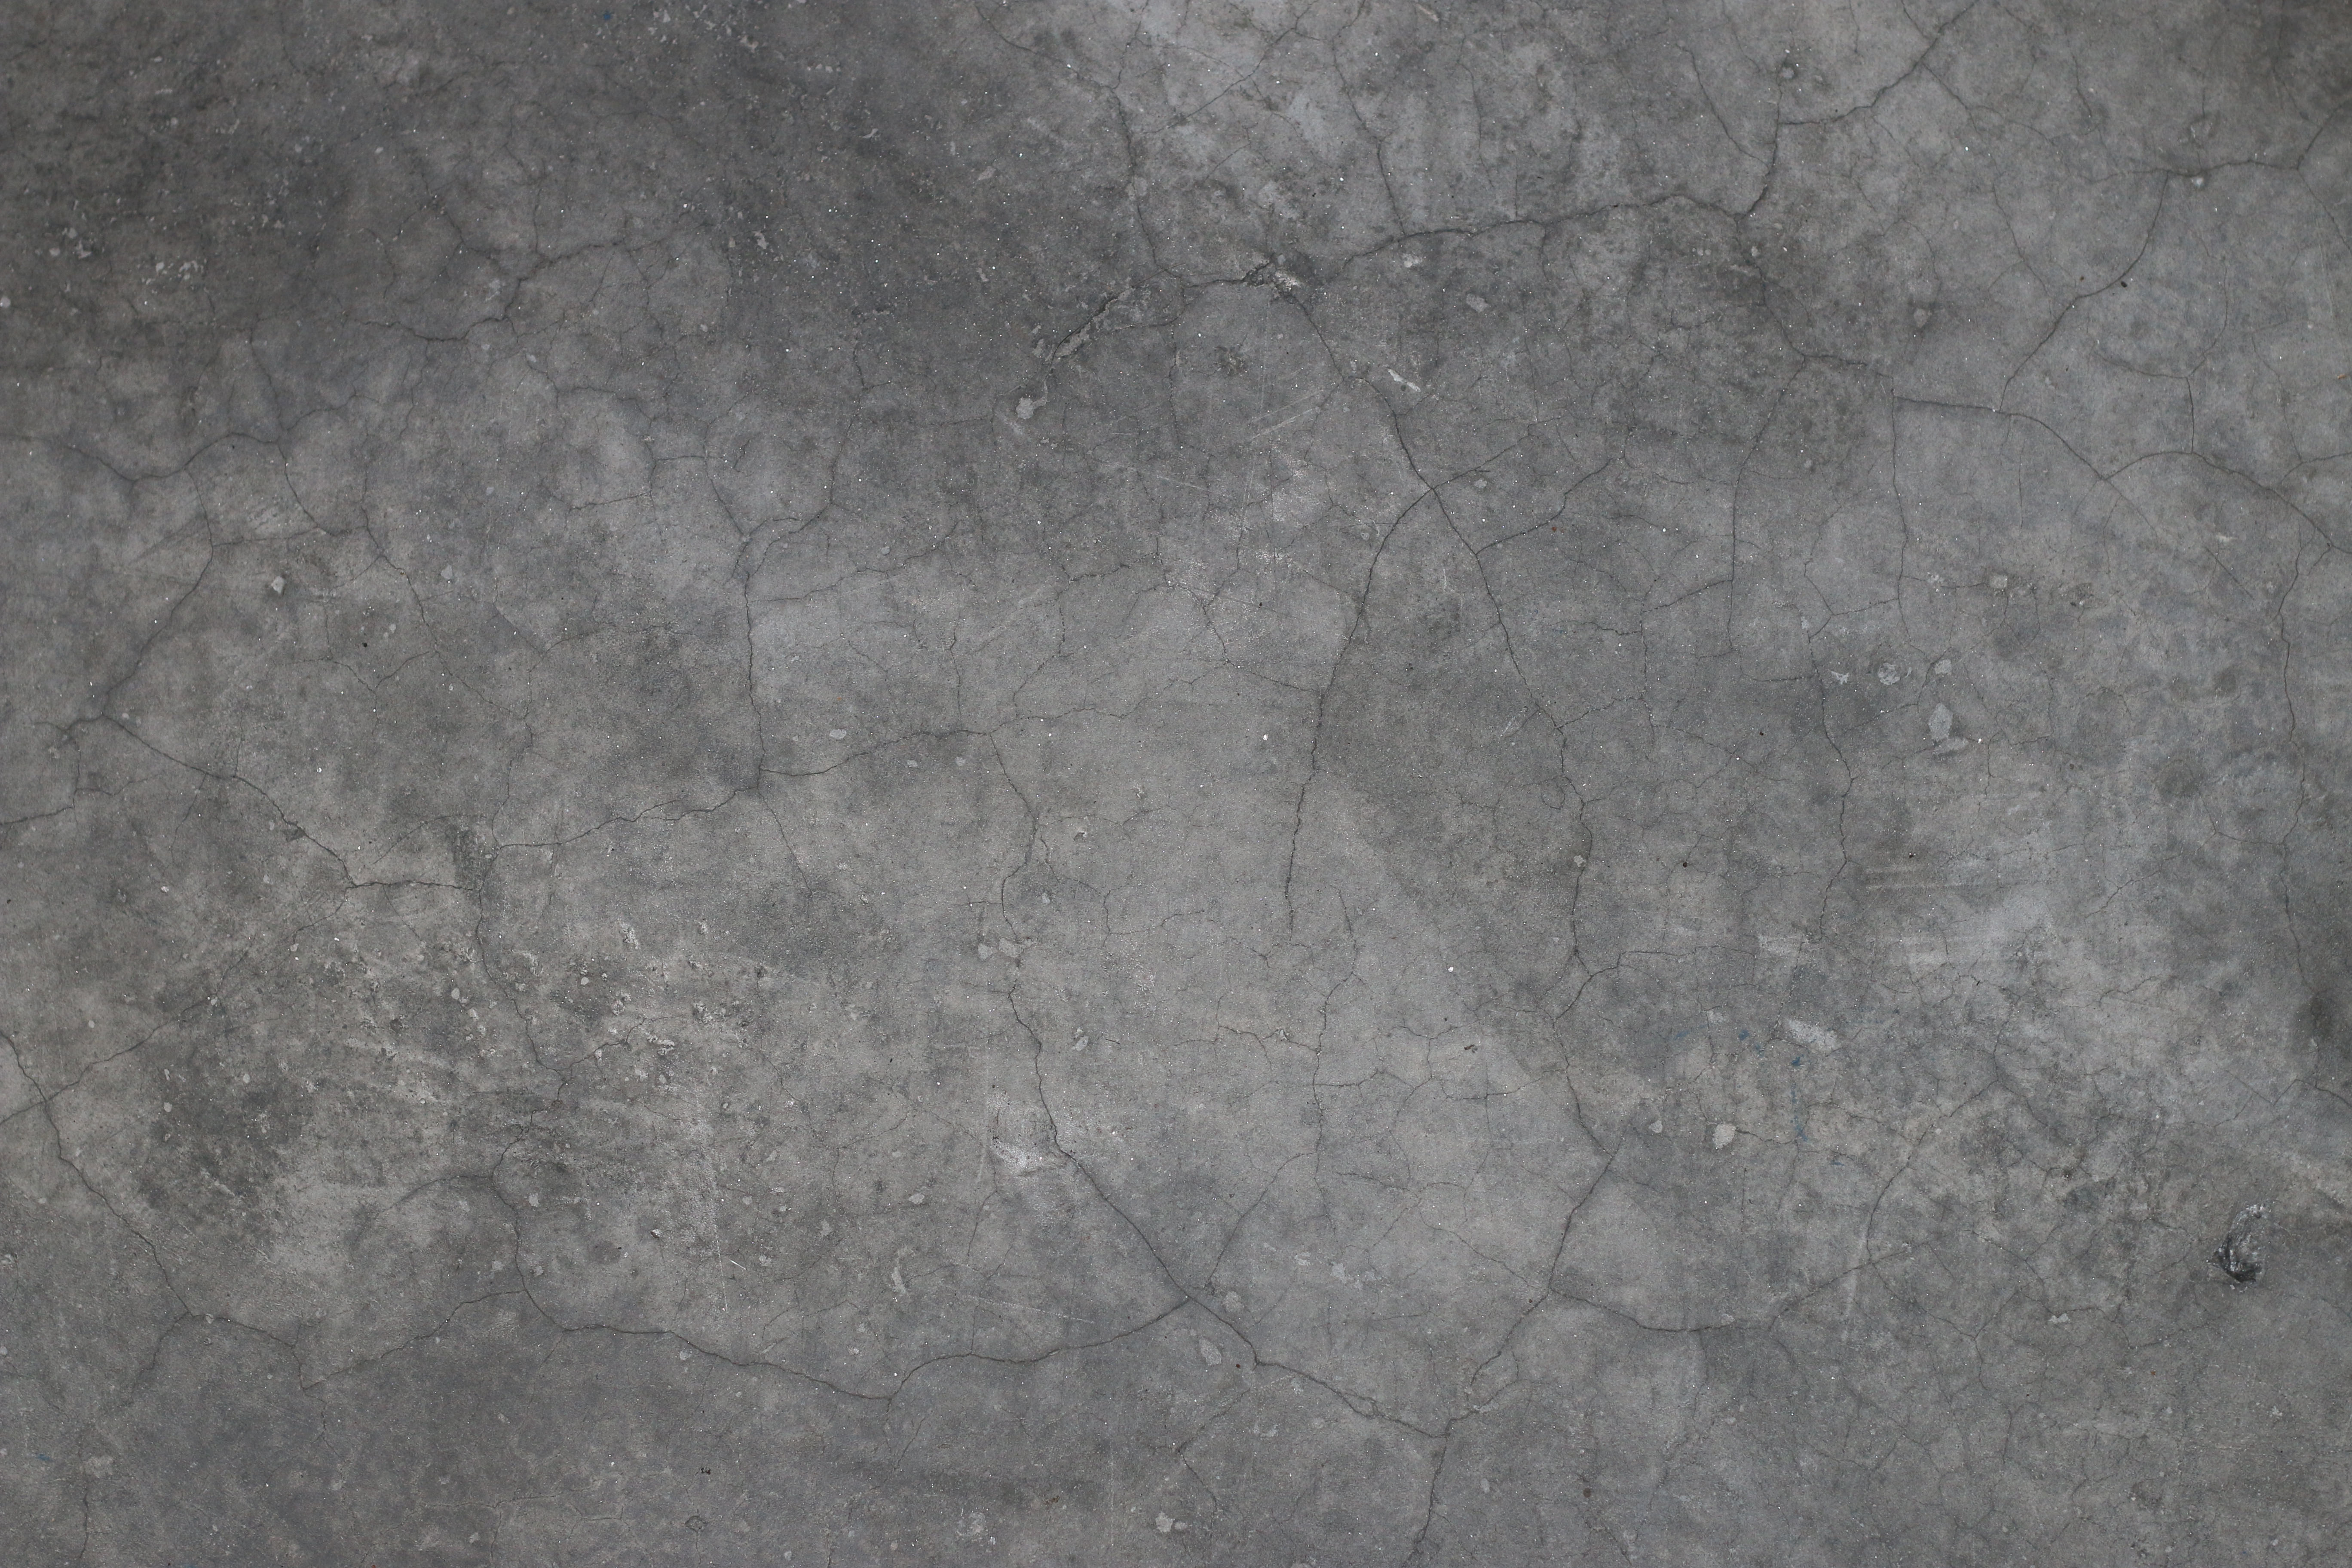 28+ Free Black Concrete Textures | Free & Premium Creatives